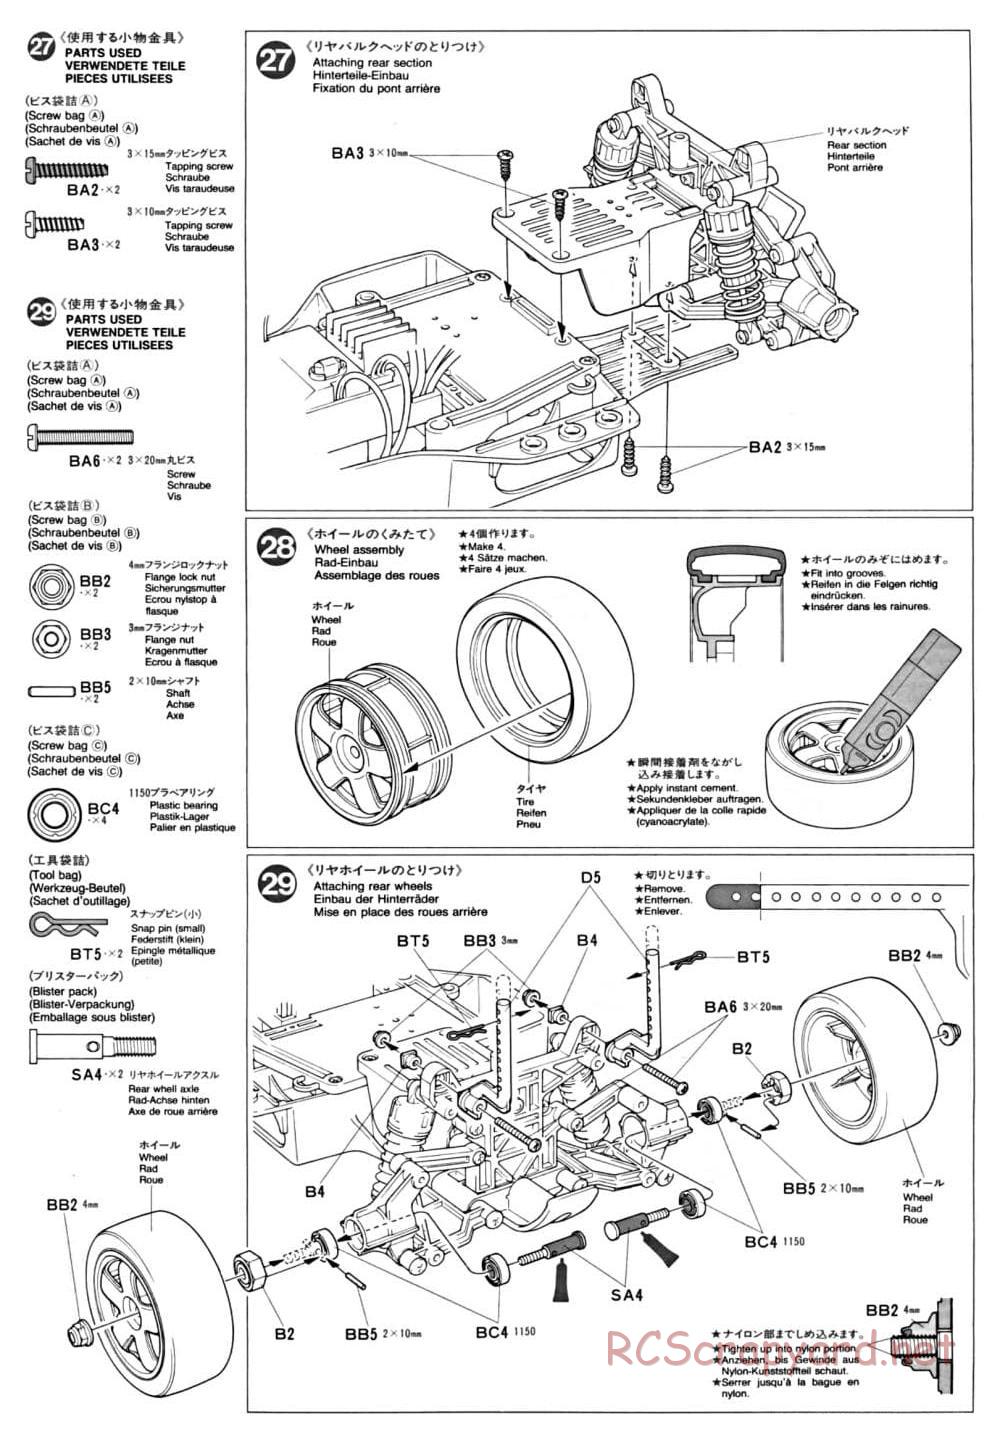 Tamiya - FF-01 Chassis - Manual - Page 14